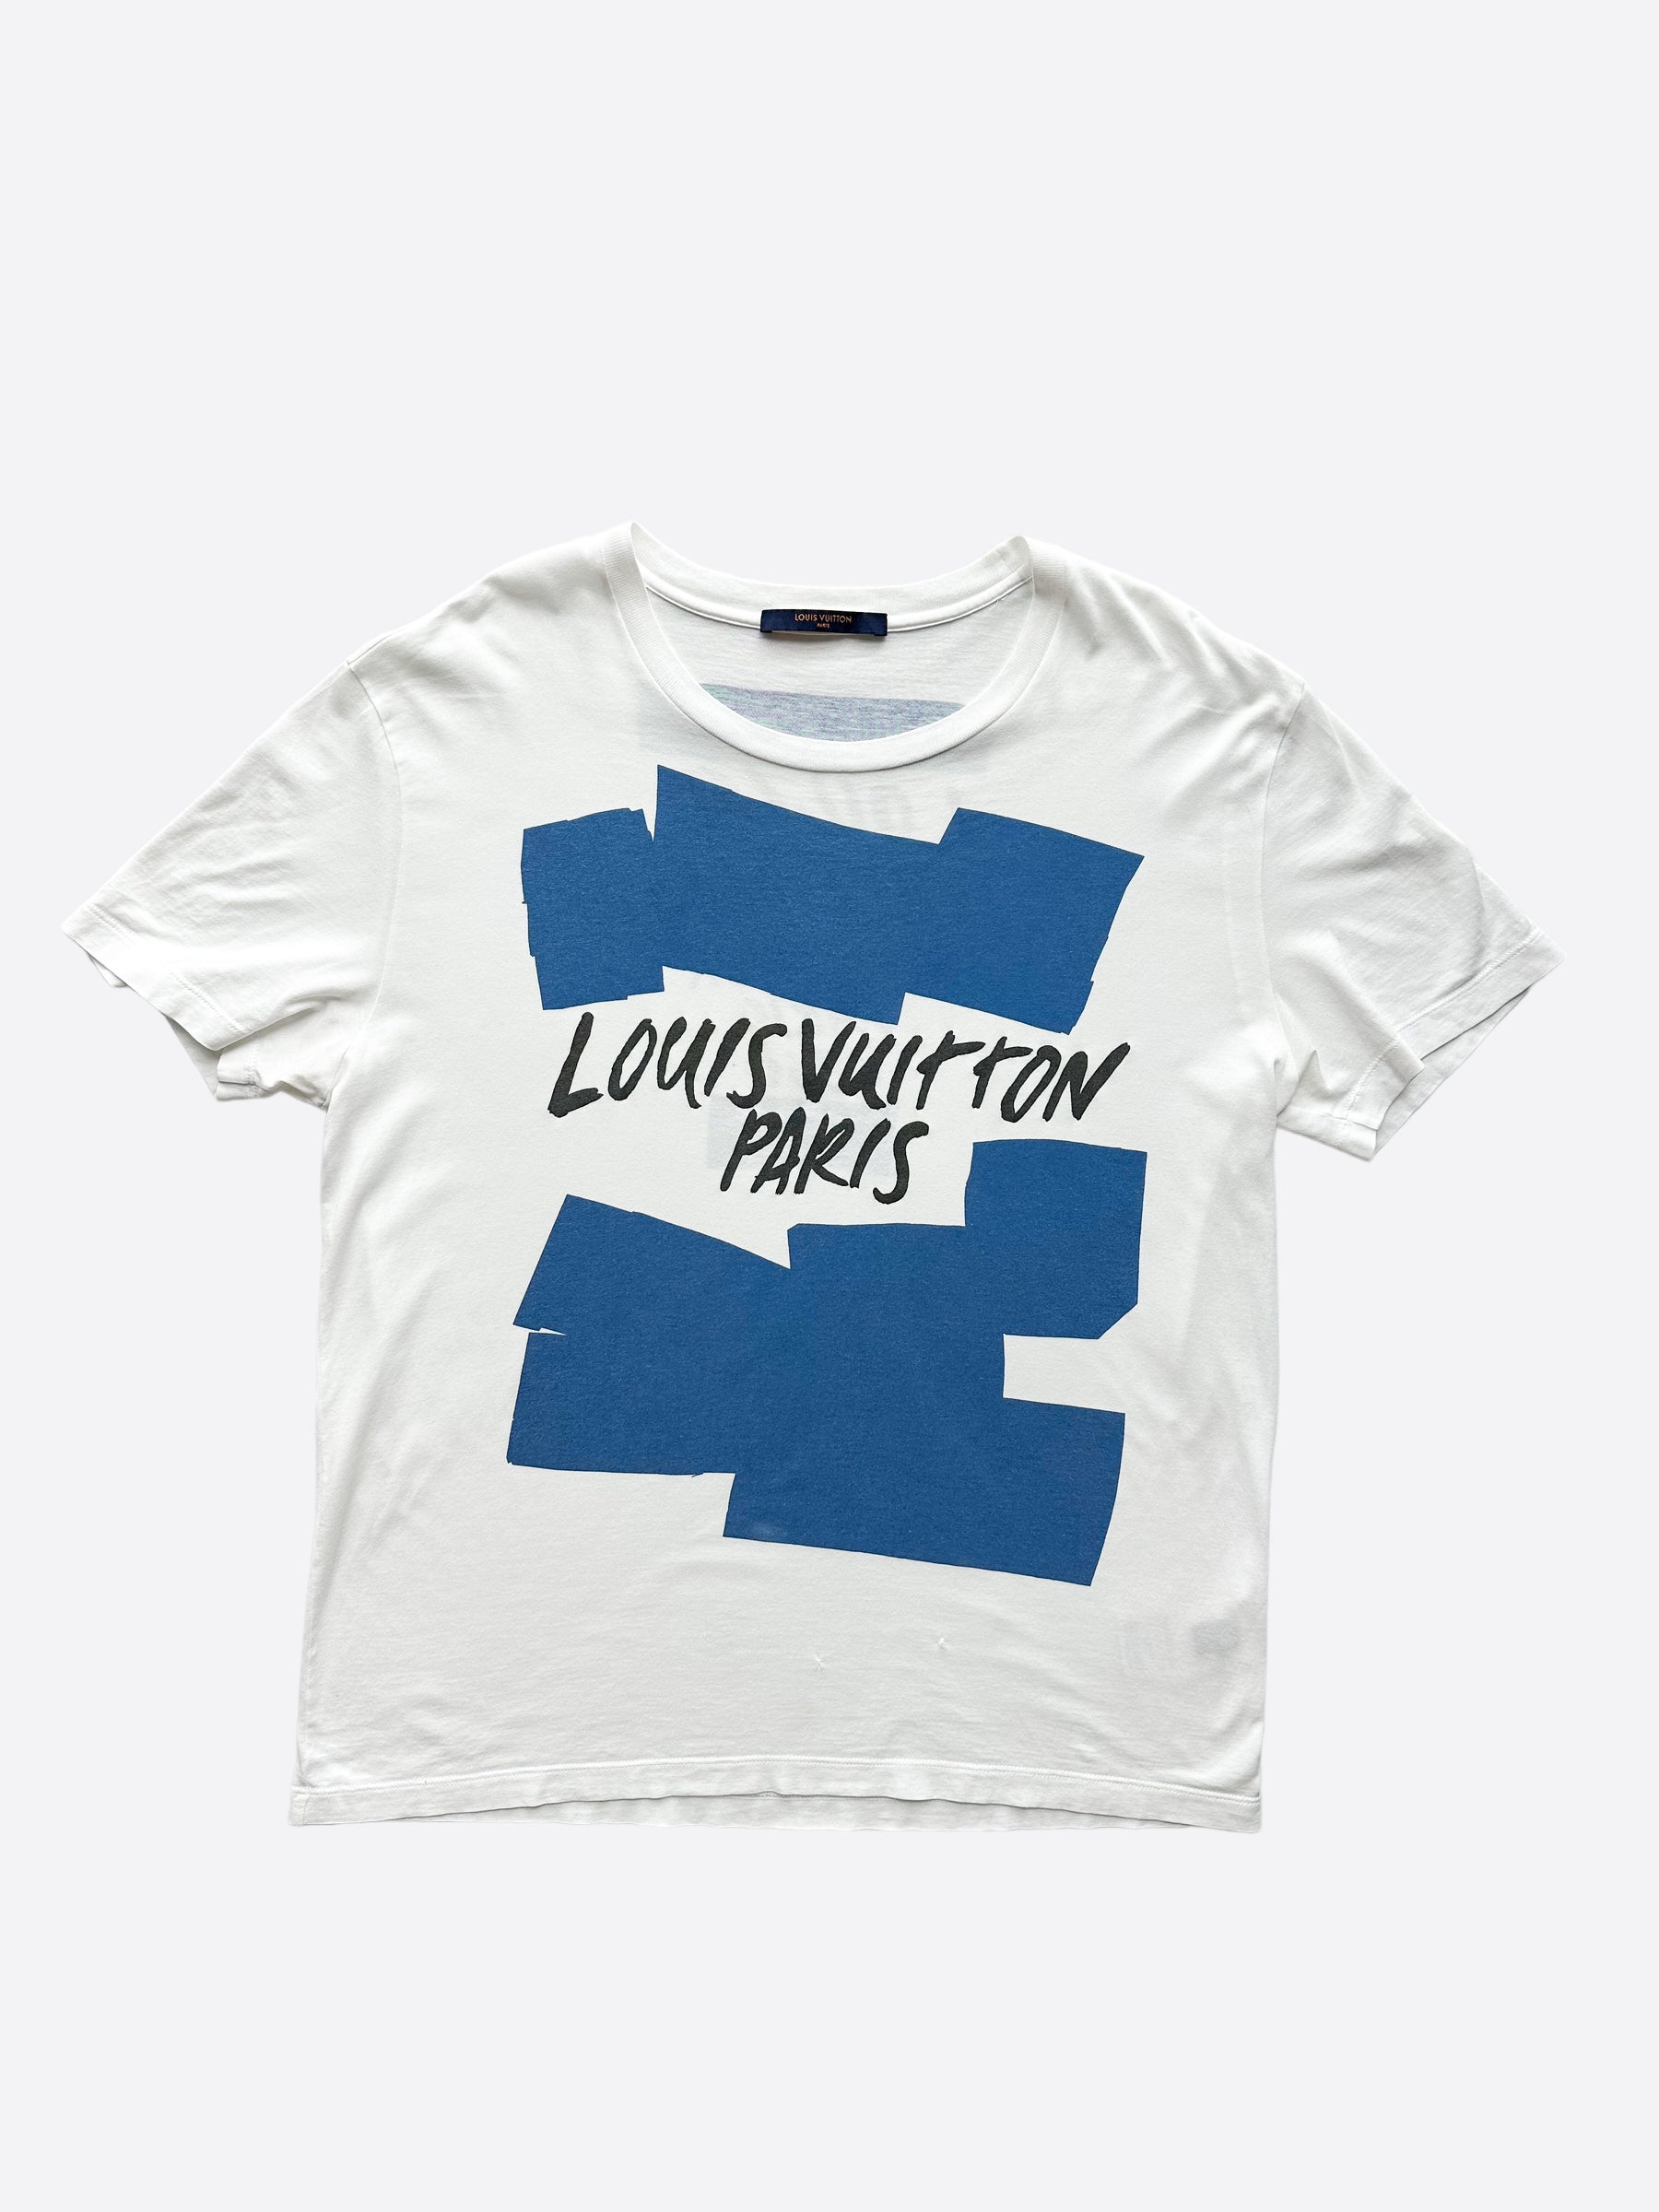 louis vuitton graphic tee shirts for women